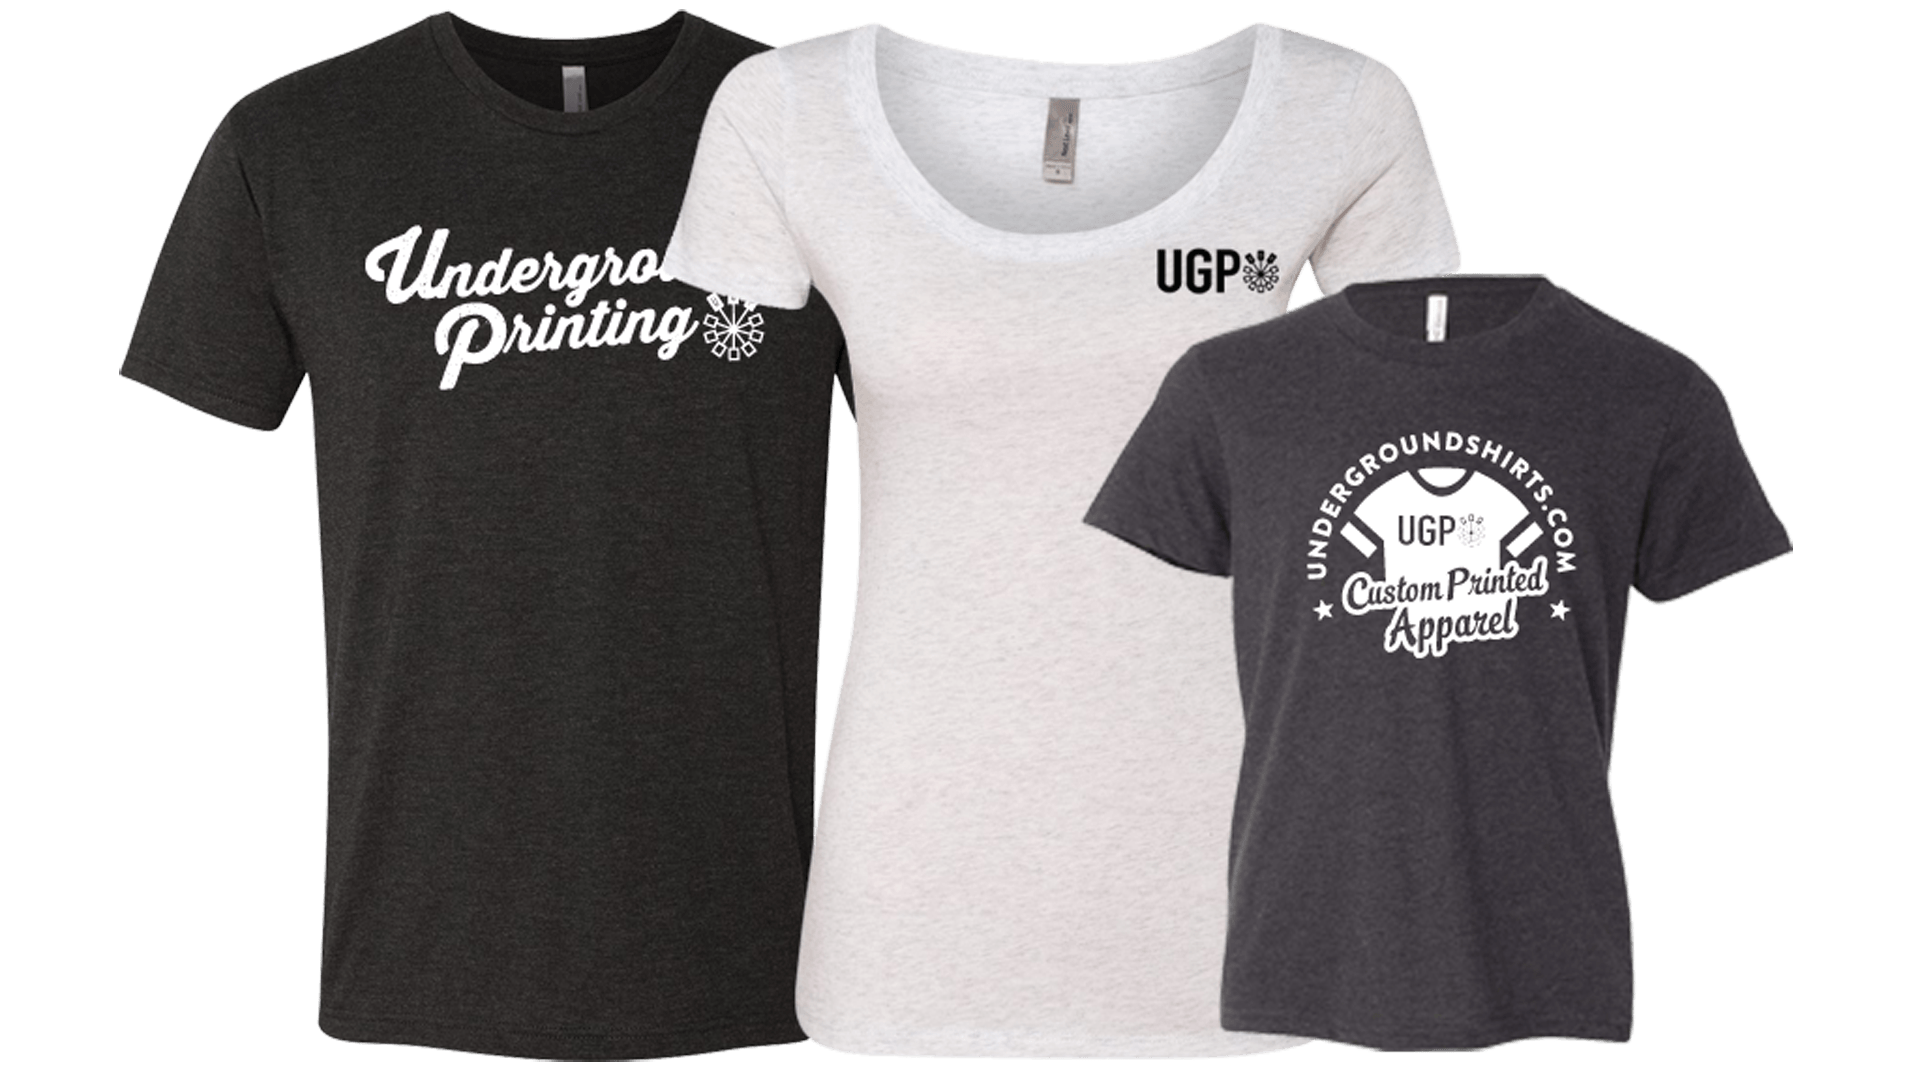 Black and White University of Minnesota Twin Cities Logo - Custom T-Shirt Printing in Minneapolis, MN | 225 S 6th St.